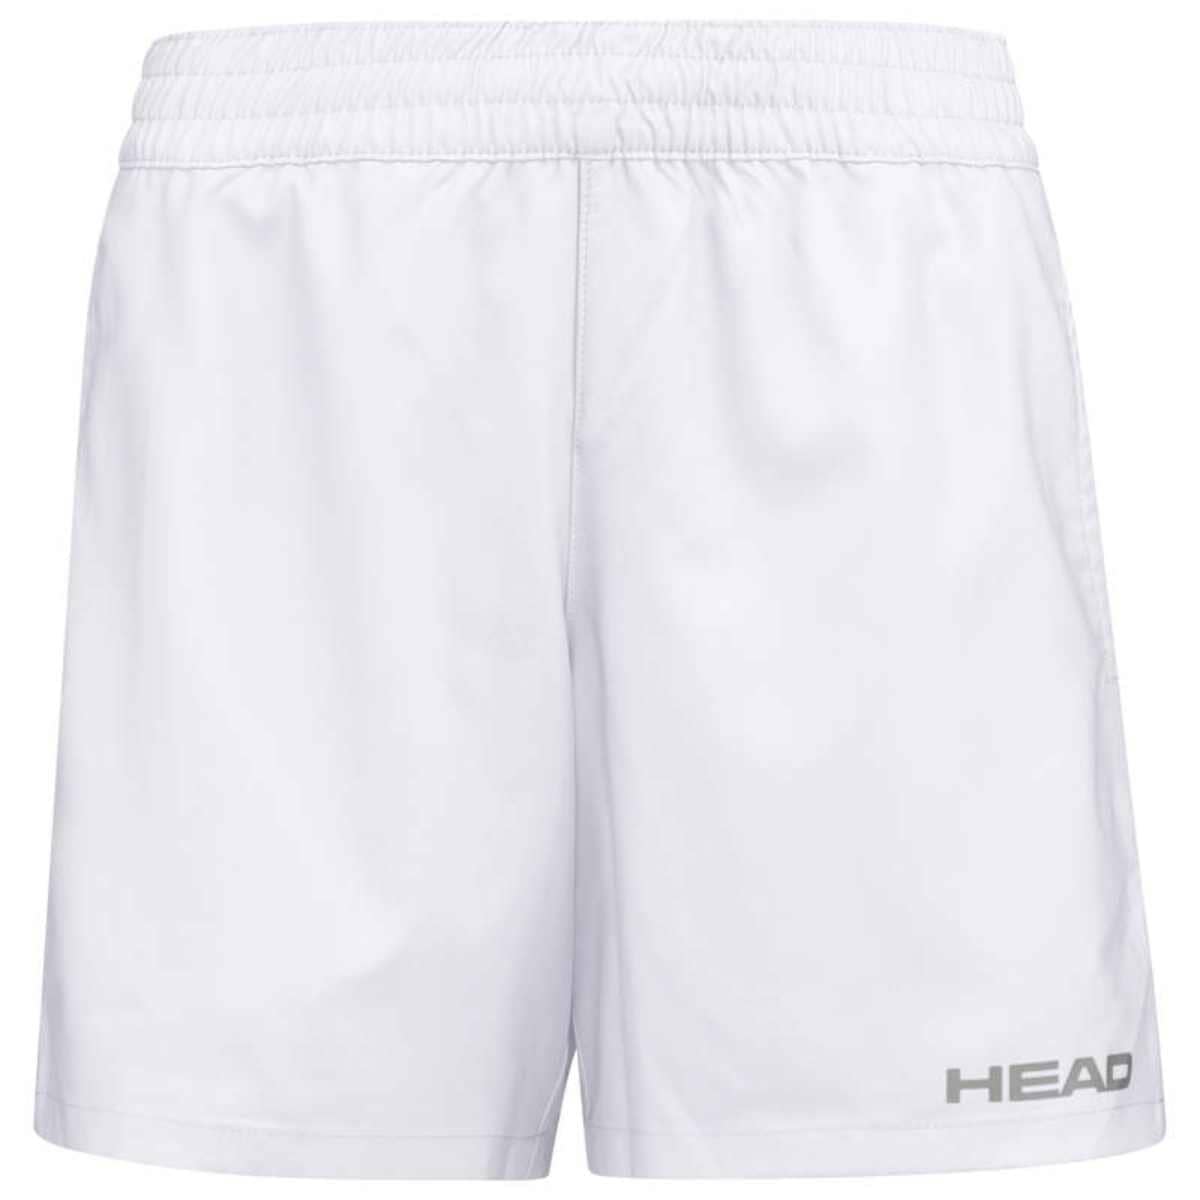 HEAD Club Shorts Dame Hvid